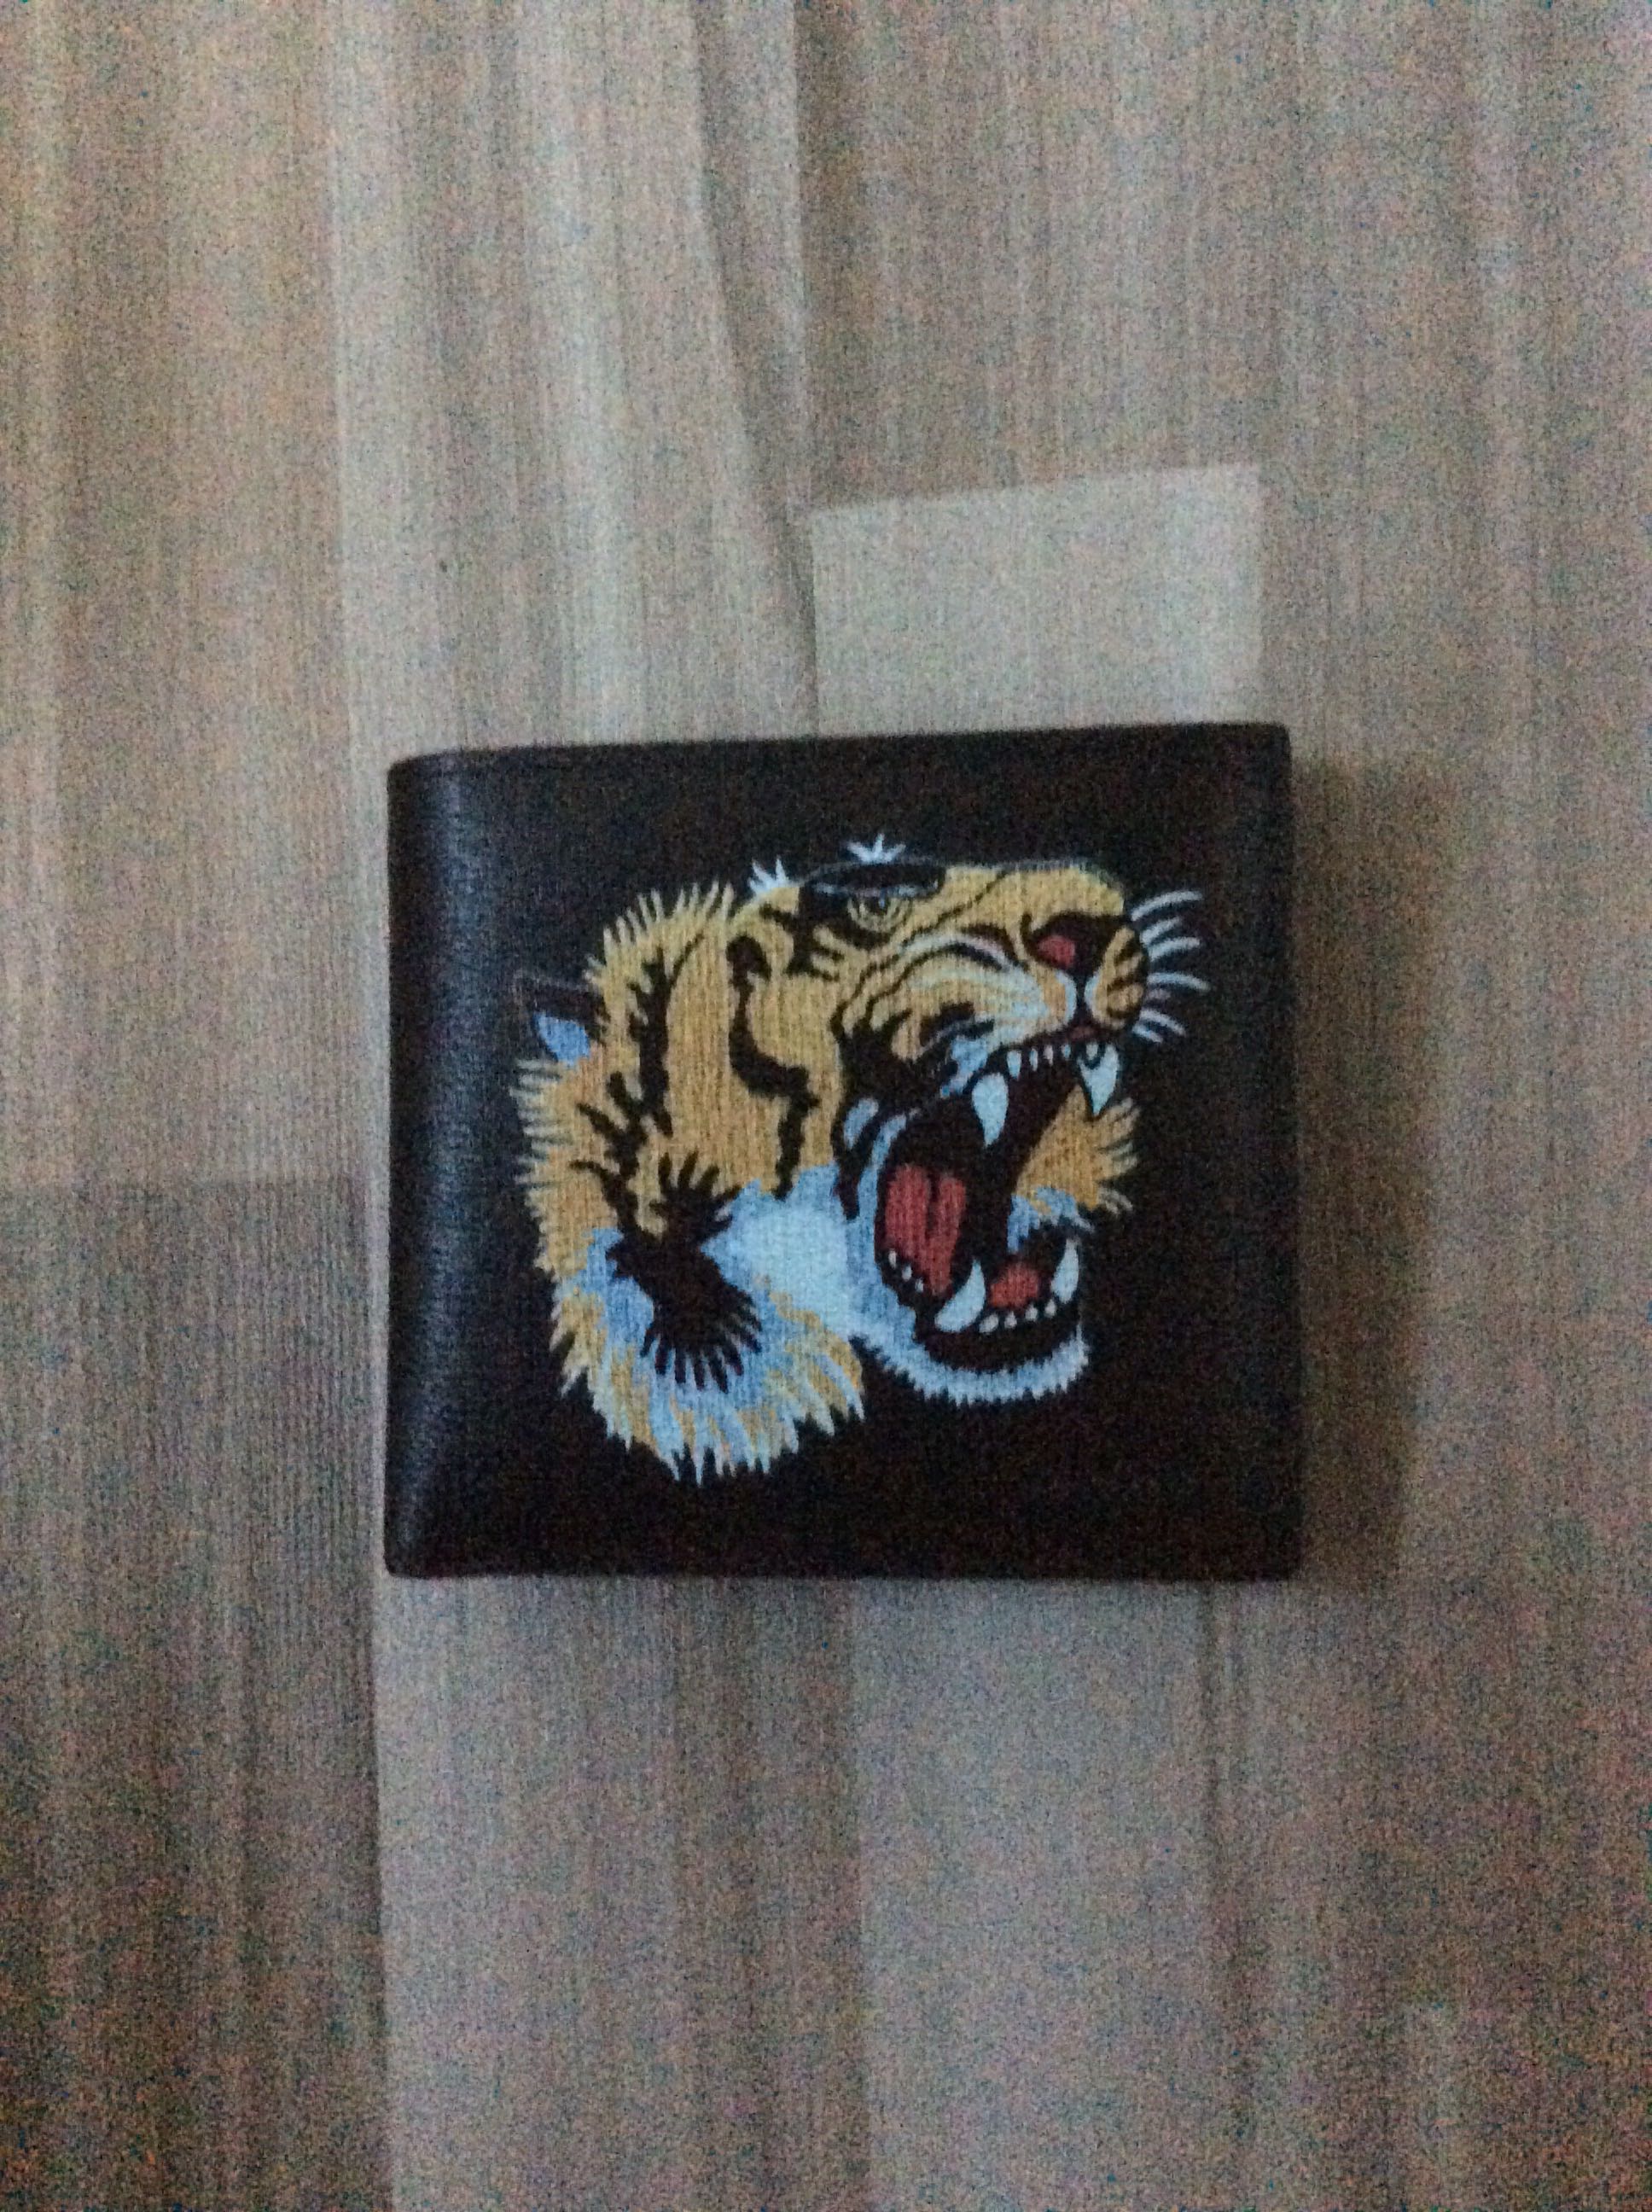 gucci tiger wallet black